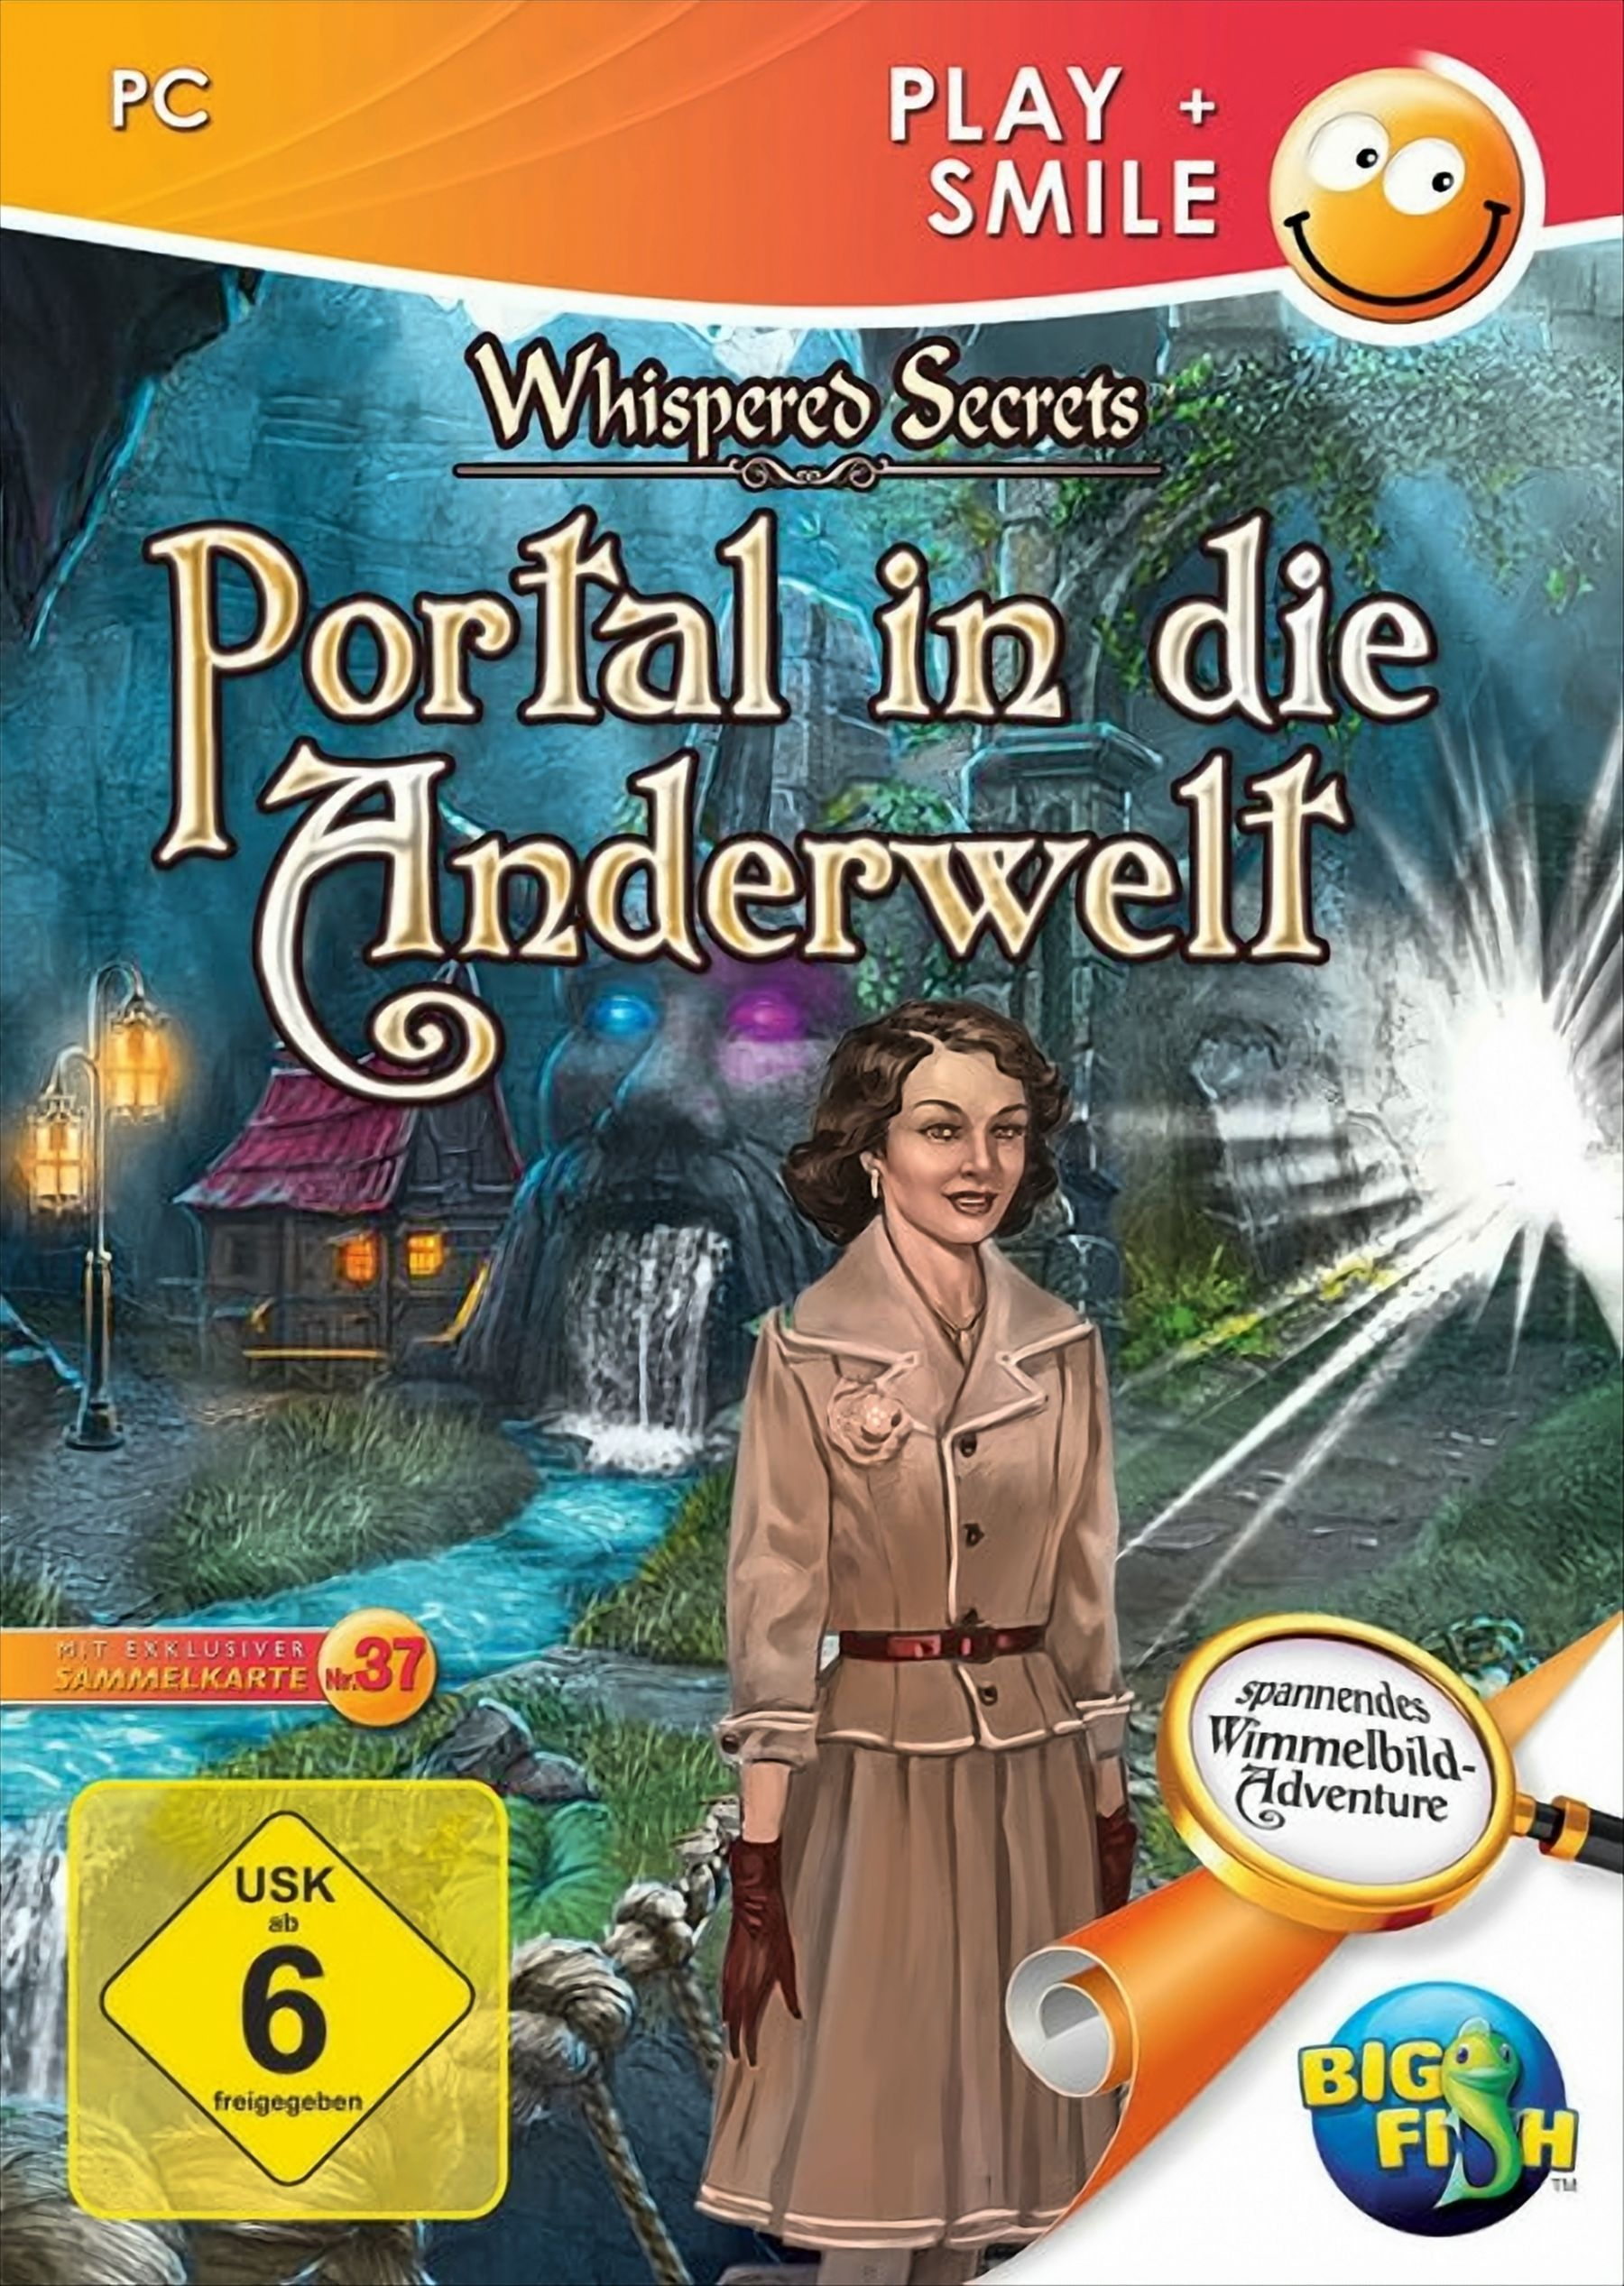 die in - Anderwelt Portal [PC] Secrets: Whispered